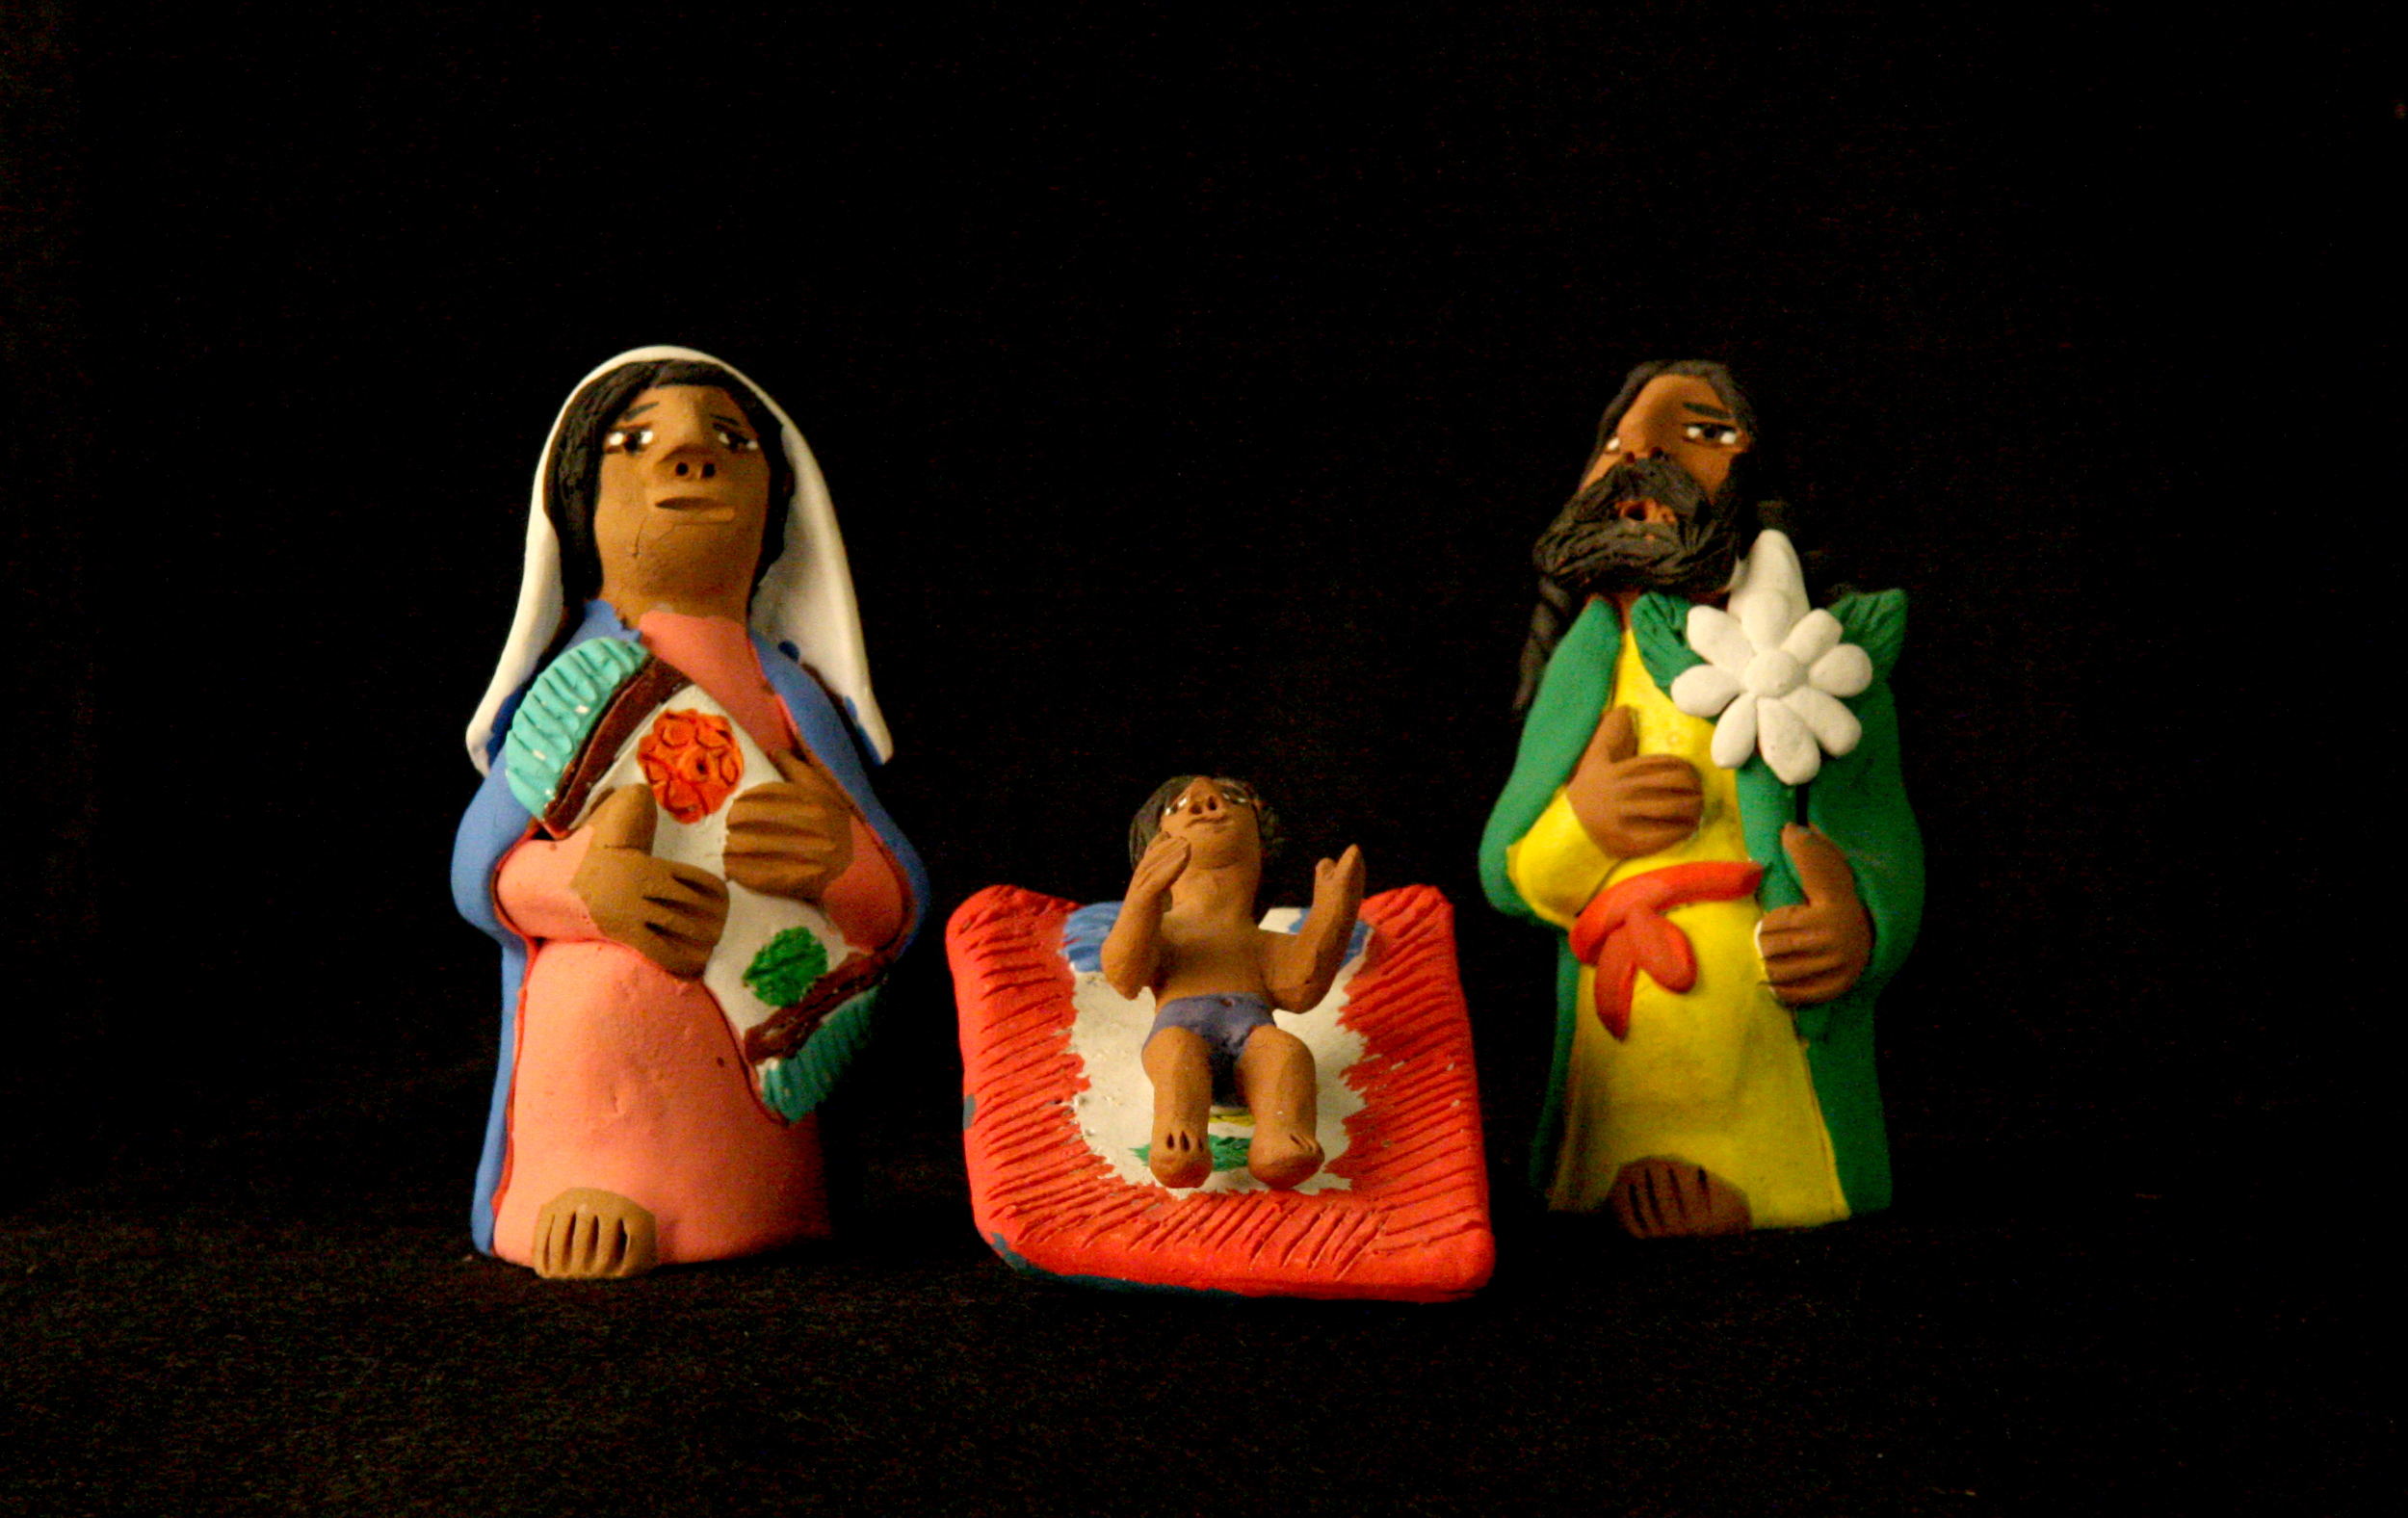 Travelling Crib for a School Real Christmas scene Nativity.Christmas Crib Religious Crib.Travelling Nativity for a School Fair Trade Hand Painted Crib Scene 25 cm x 18 cm high Christmas Nativity Set